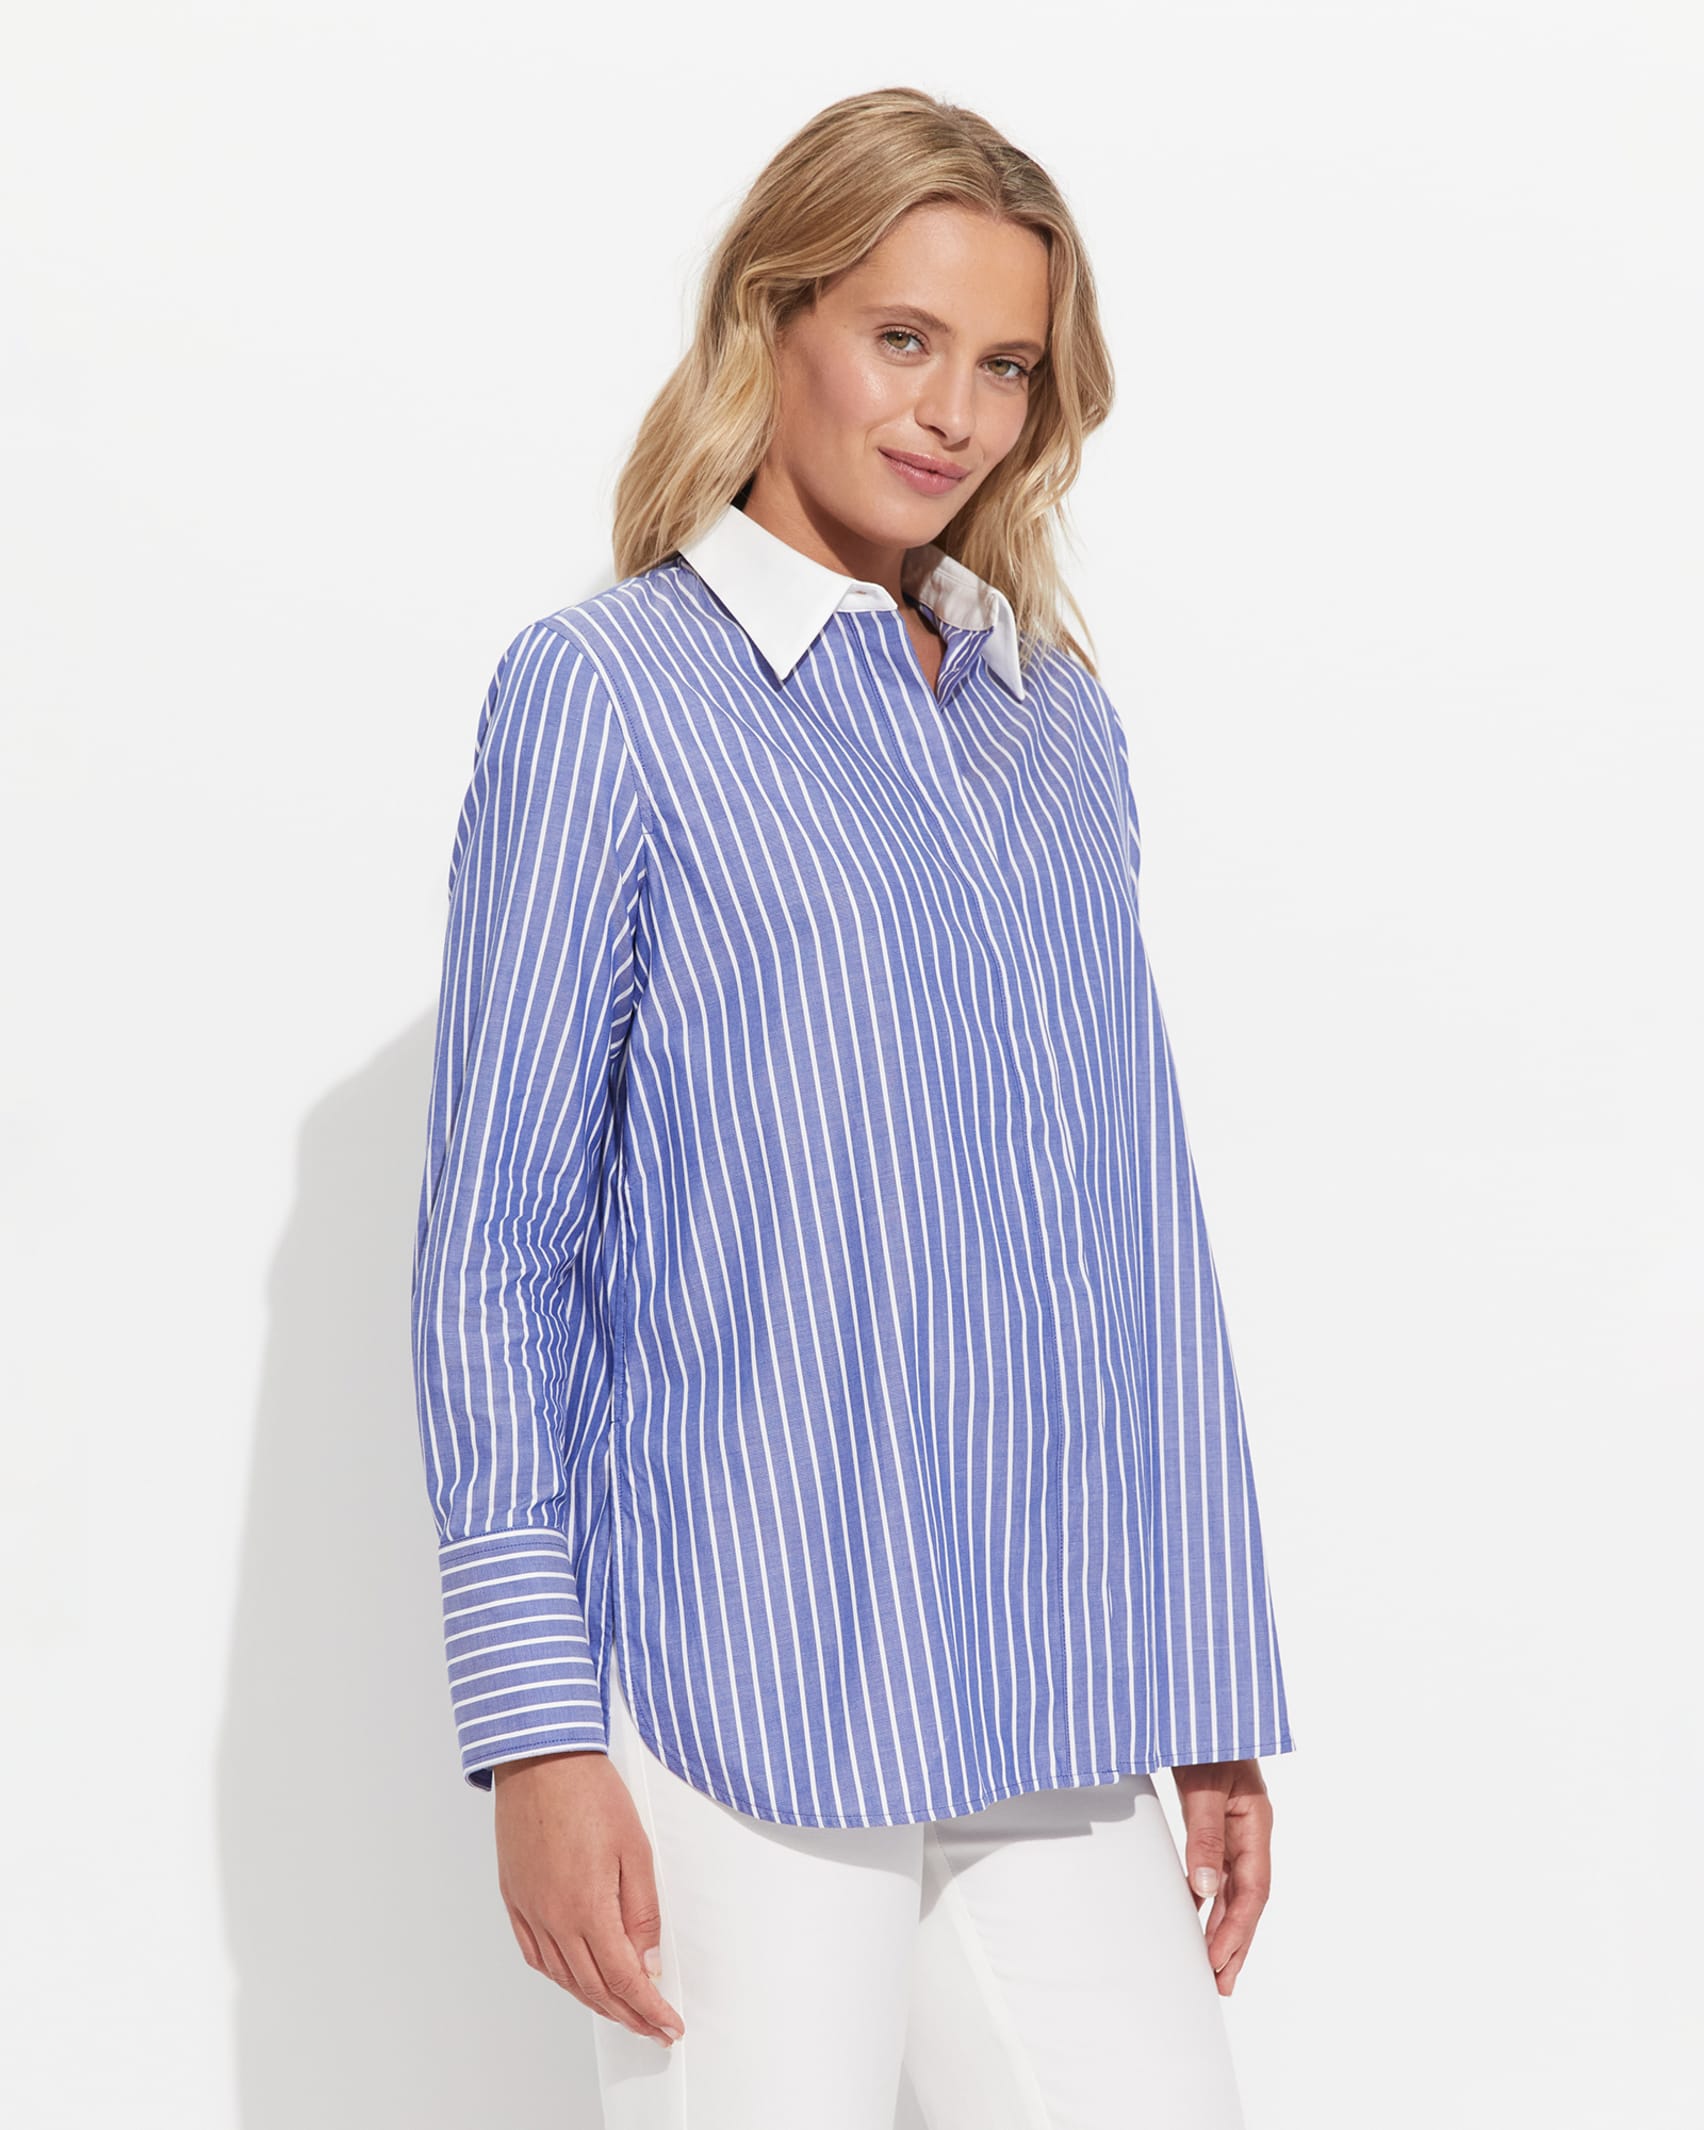 Gina Stripe Shirt in NAVY/WHITE